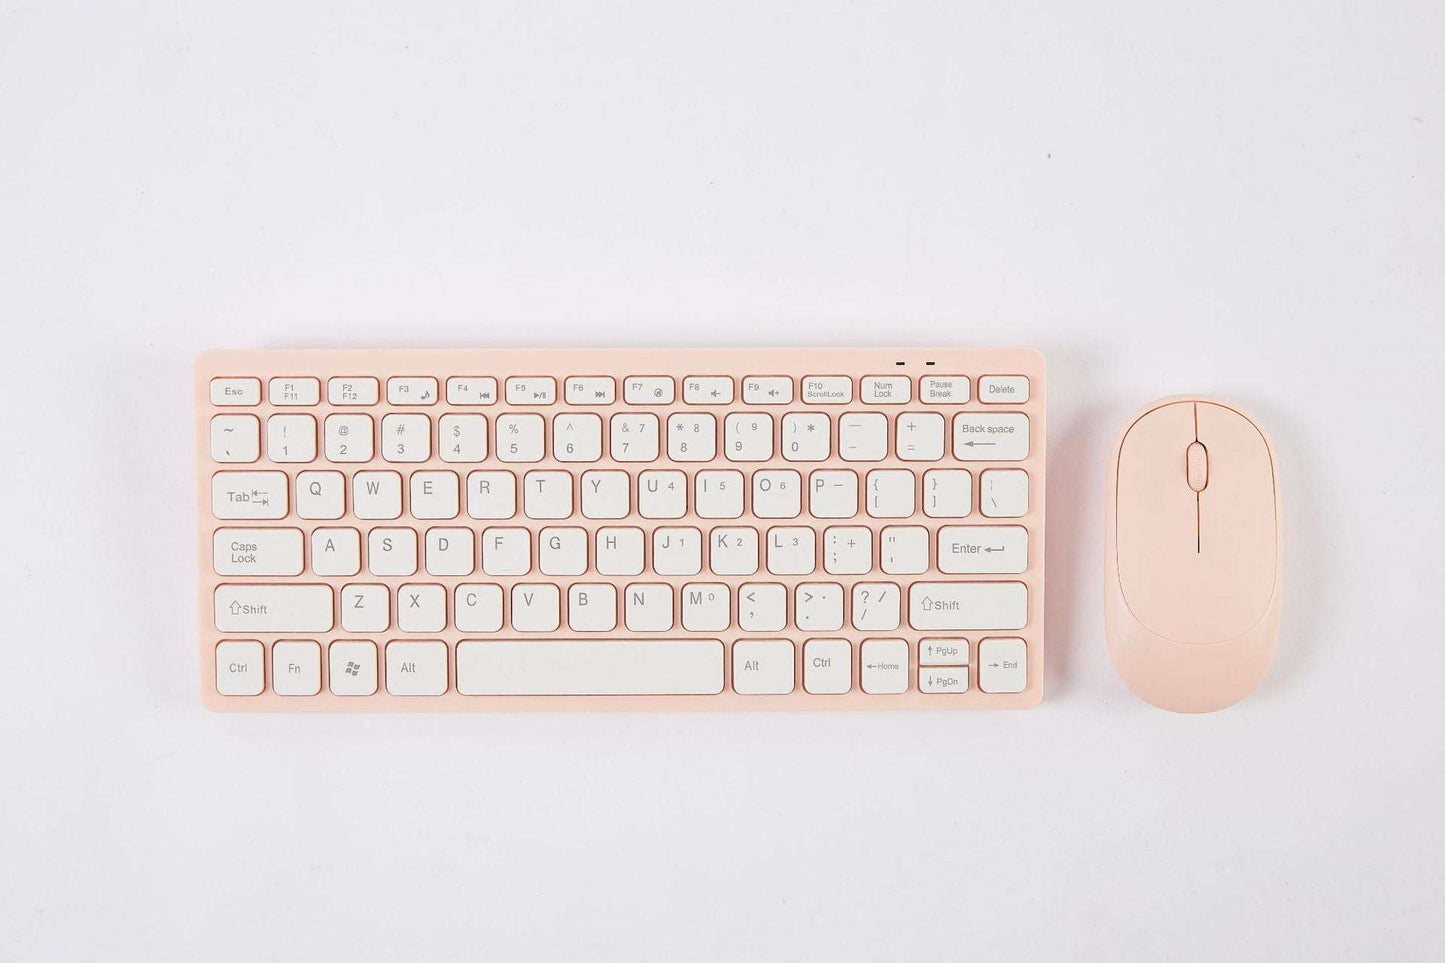 Mini drahtlose Maus und Tastatur Set